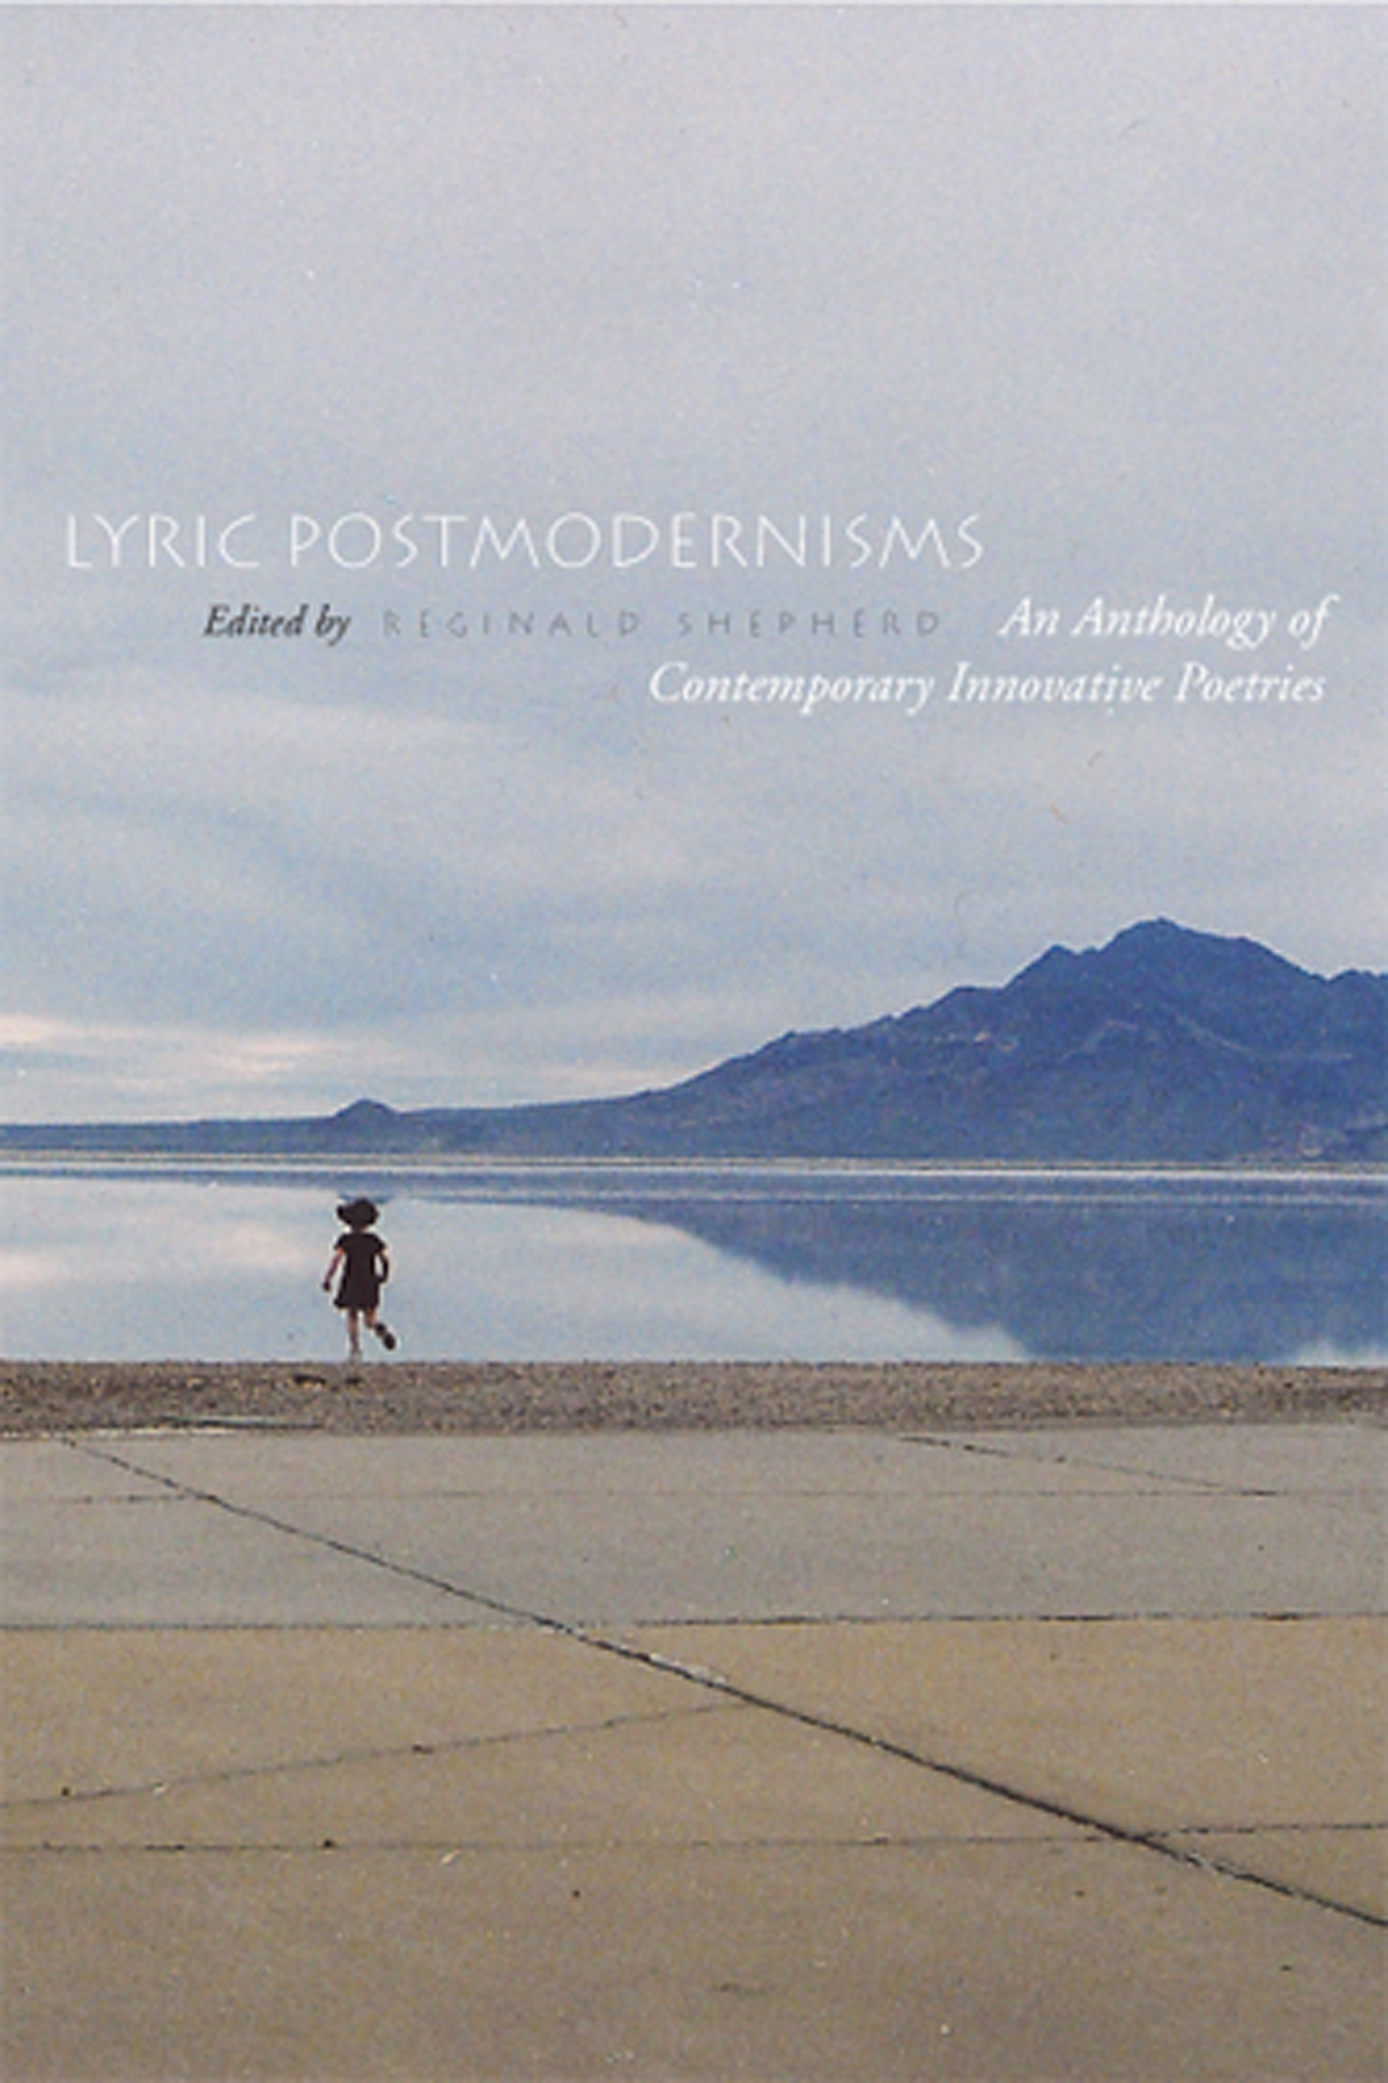 Lyric Postmodernisms: An Anthology of Contemporary Innovative Poetriesedited by Reginald Shepherd